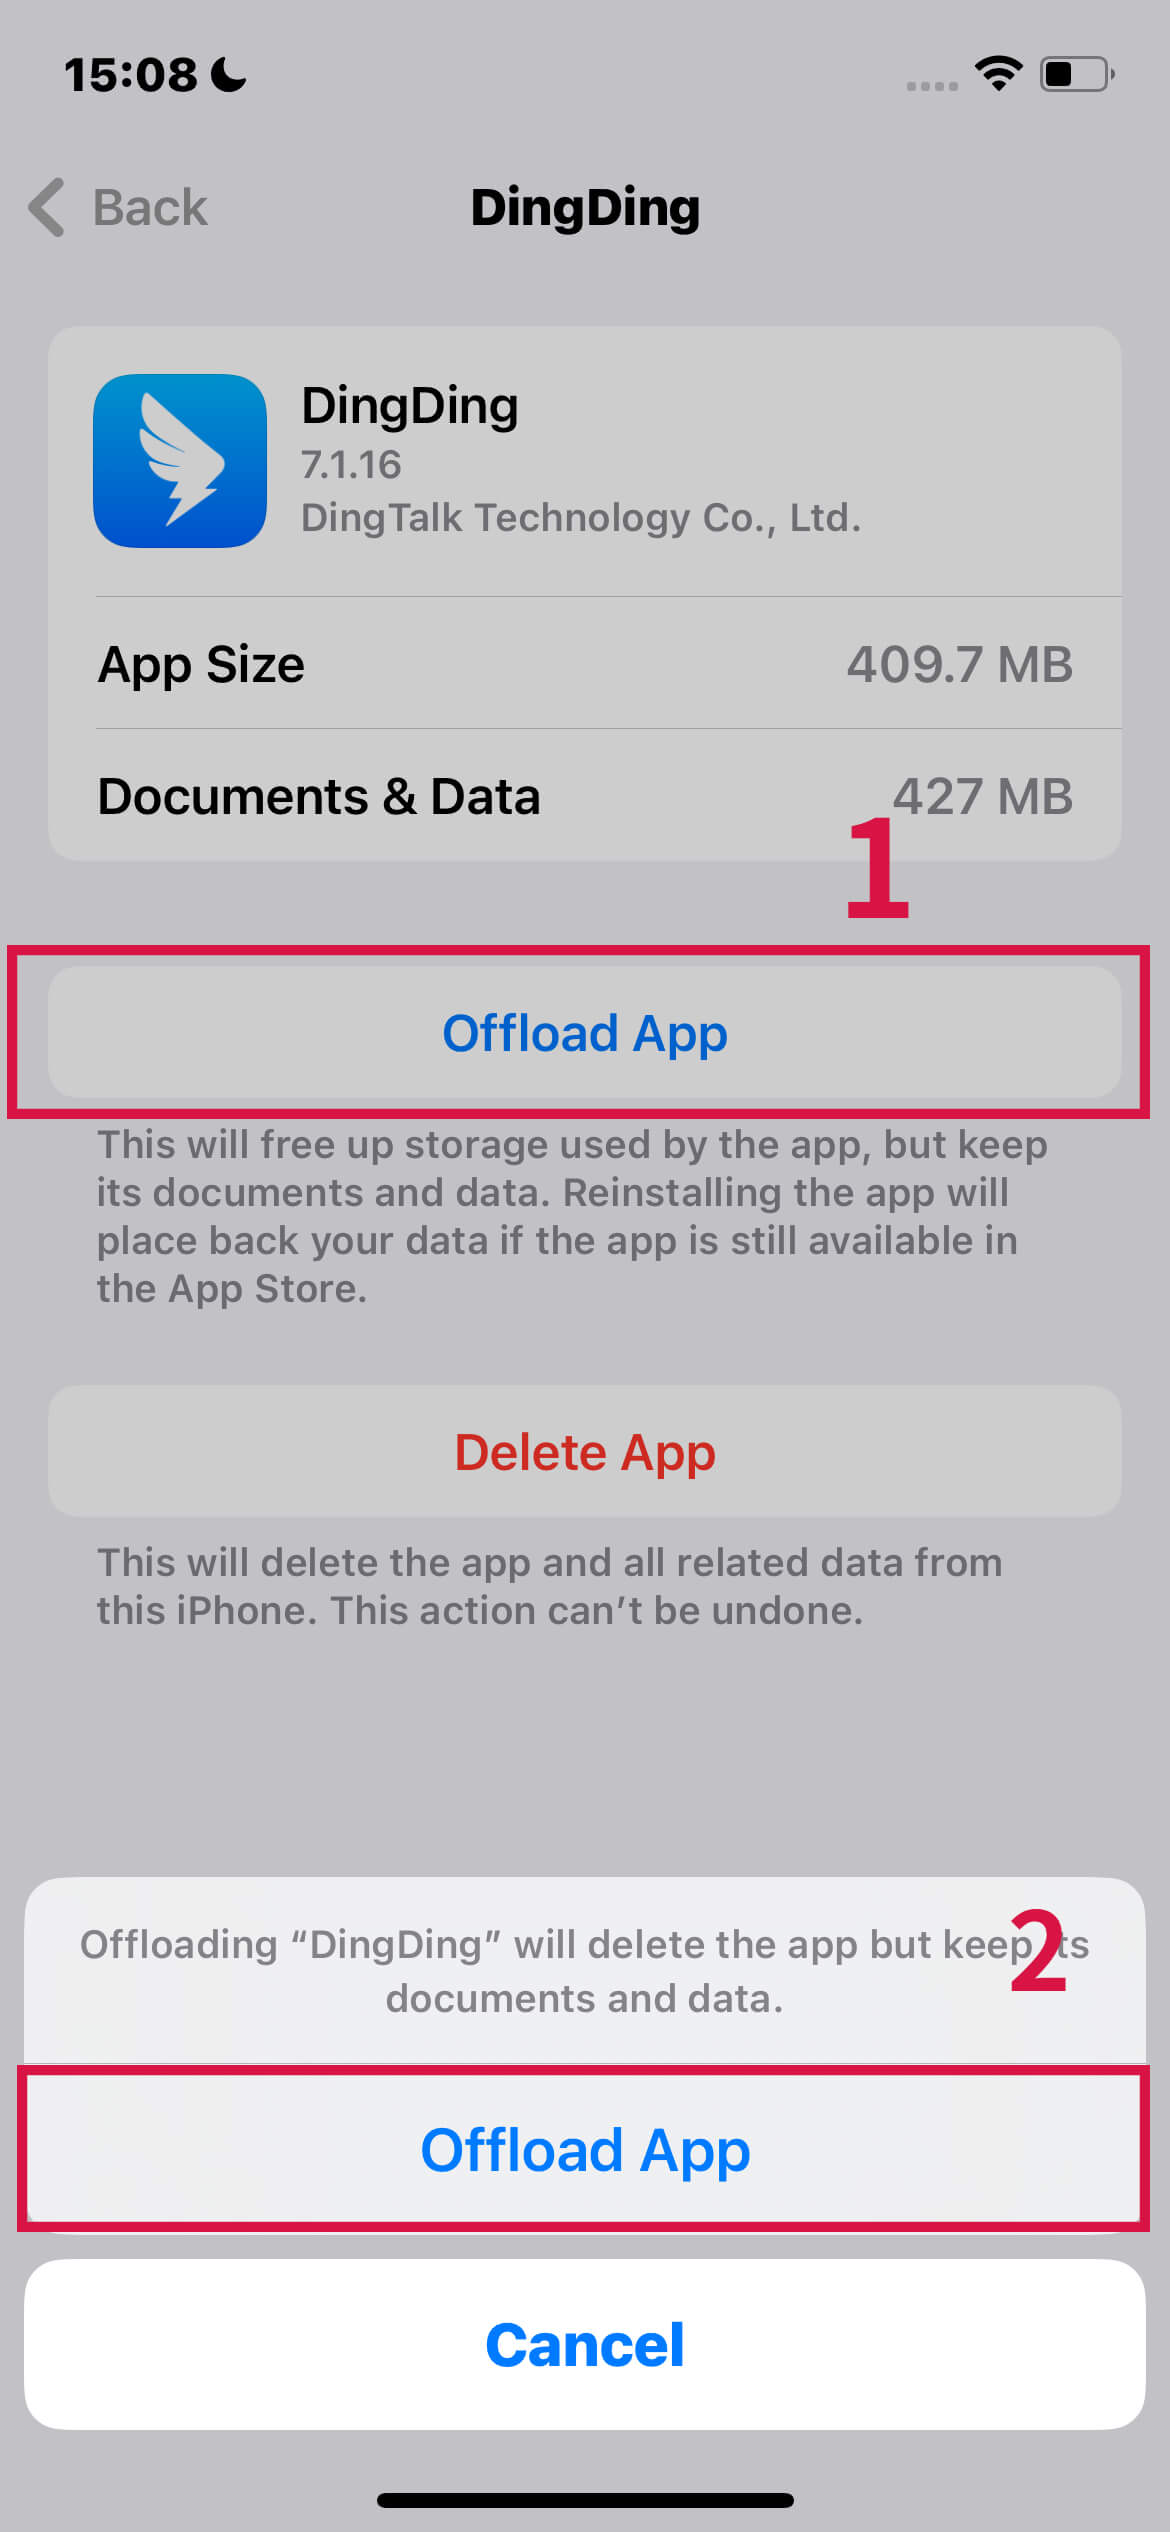 Iphone Settings App Offload App 